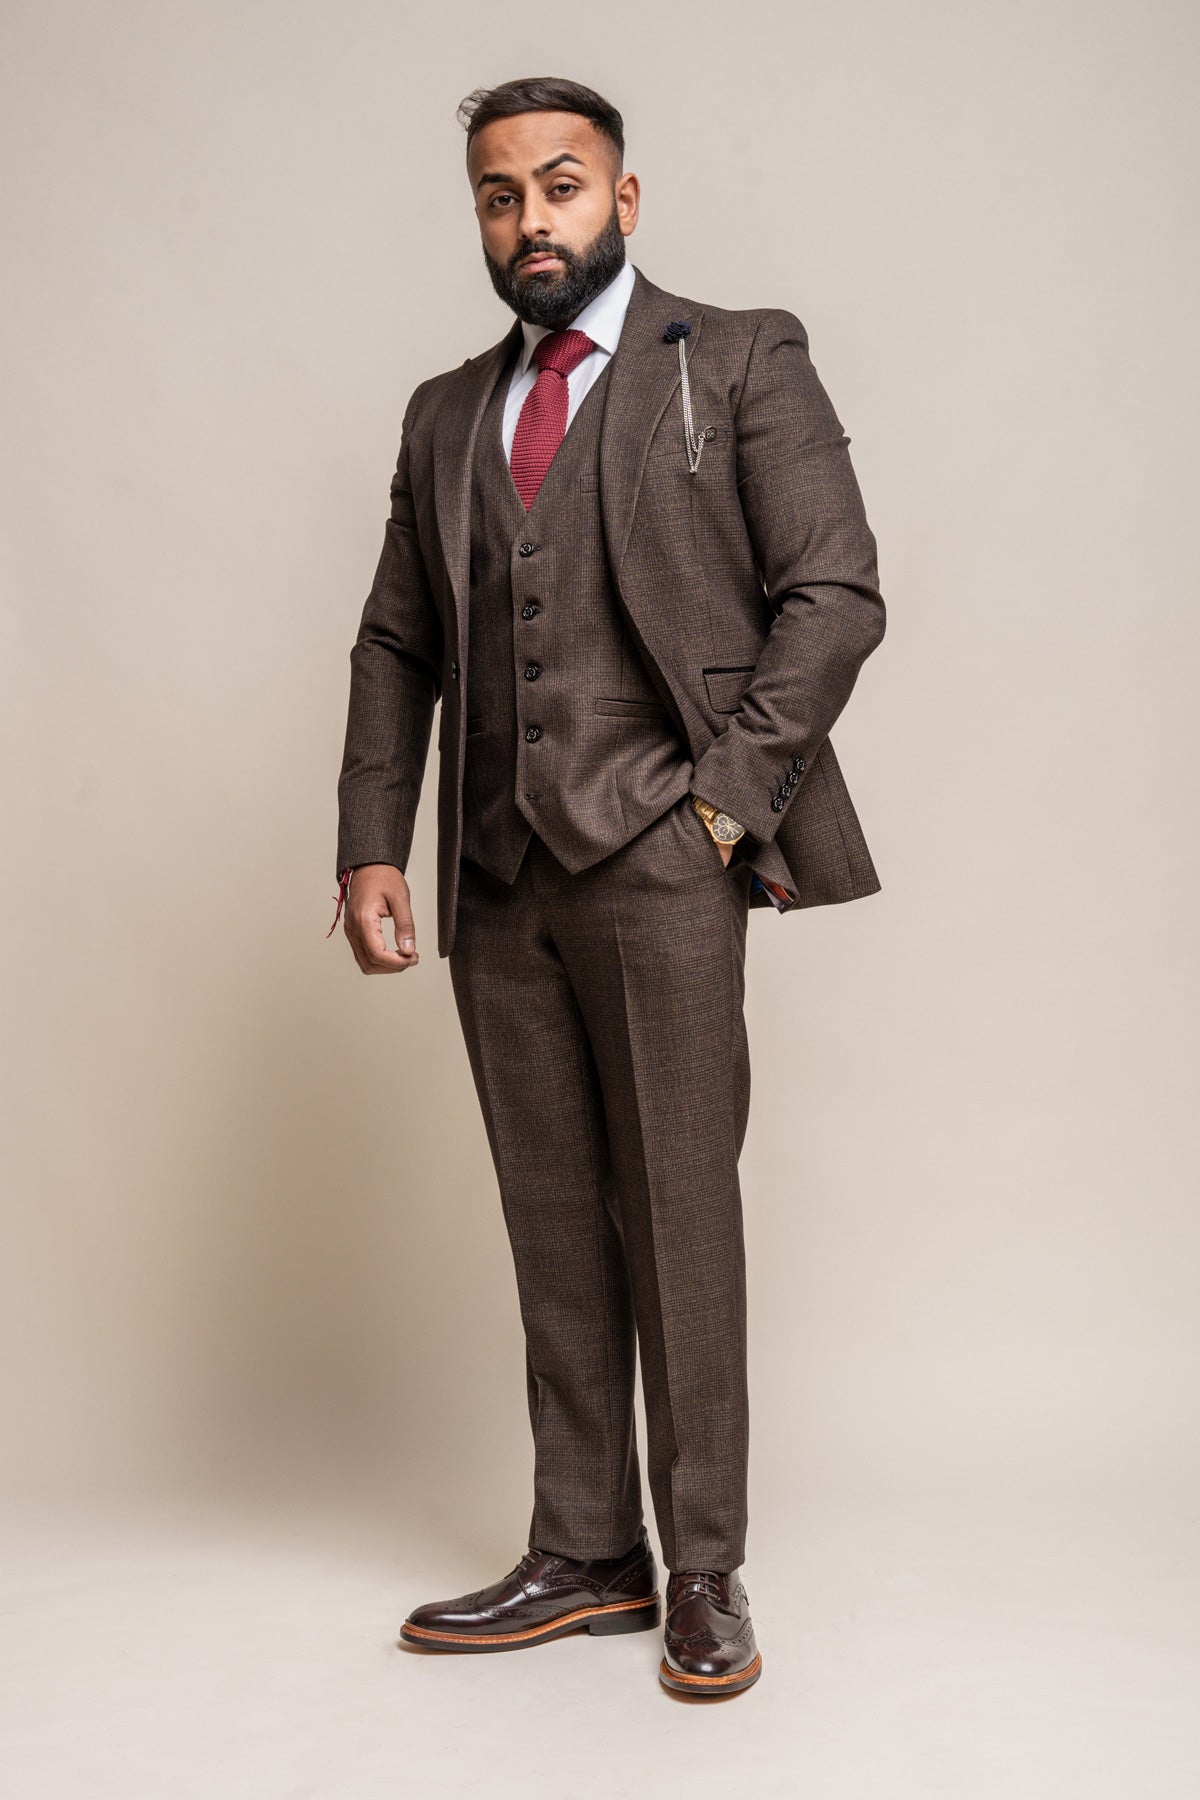 men brown suits 3 piece stylish designer slim fit formal fashion dinner  suits | Brown suits for men, Three piece suit wedding, Brown suits